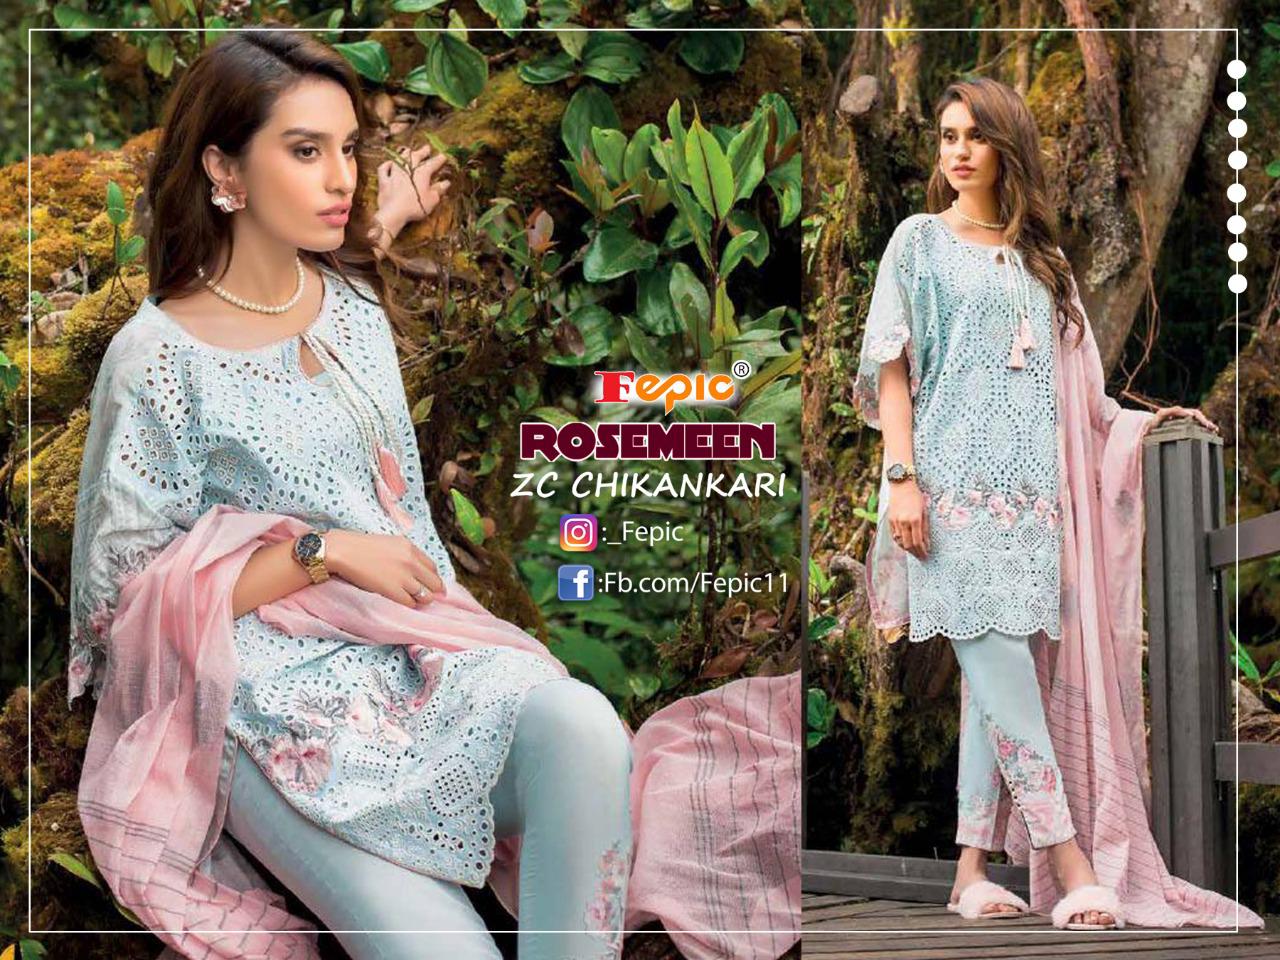 fepic rosemeen zc chikankaari cotton new and modern style salwar suit catalog